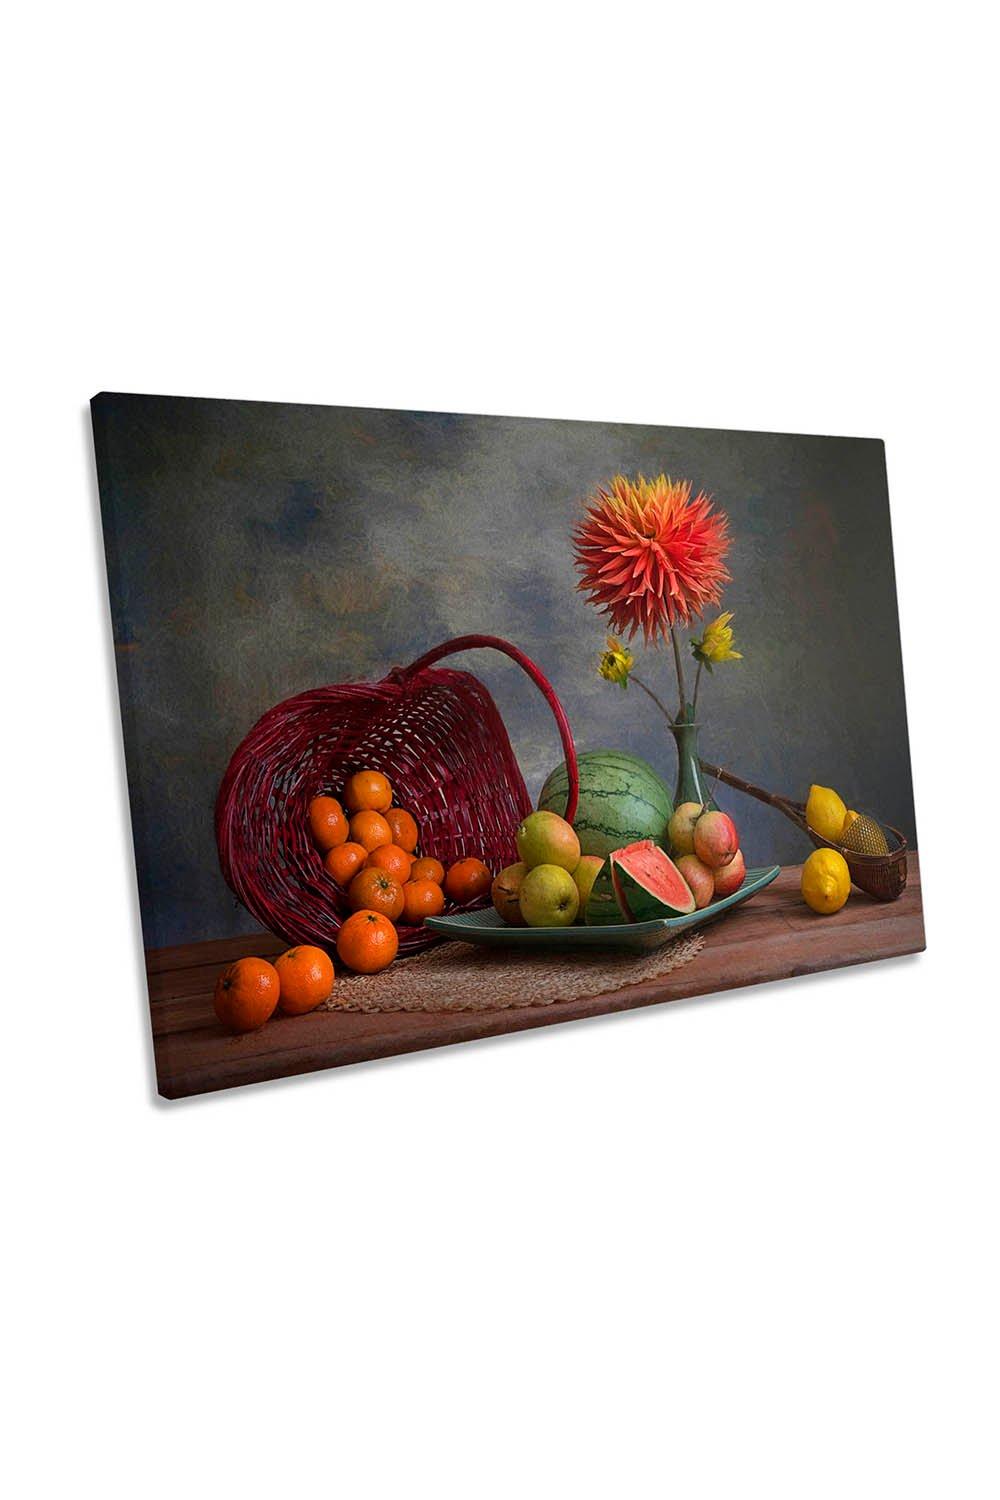 Fruit Basket Still Life Kitchen Canvas Wall Art Picture Print